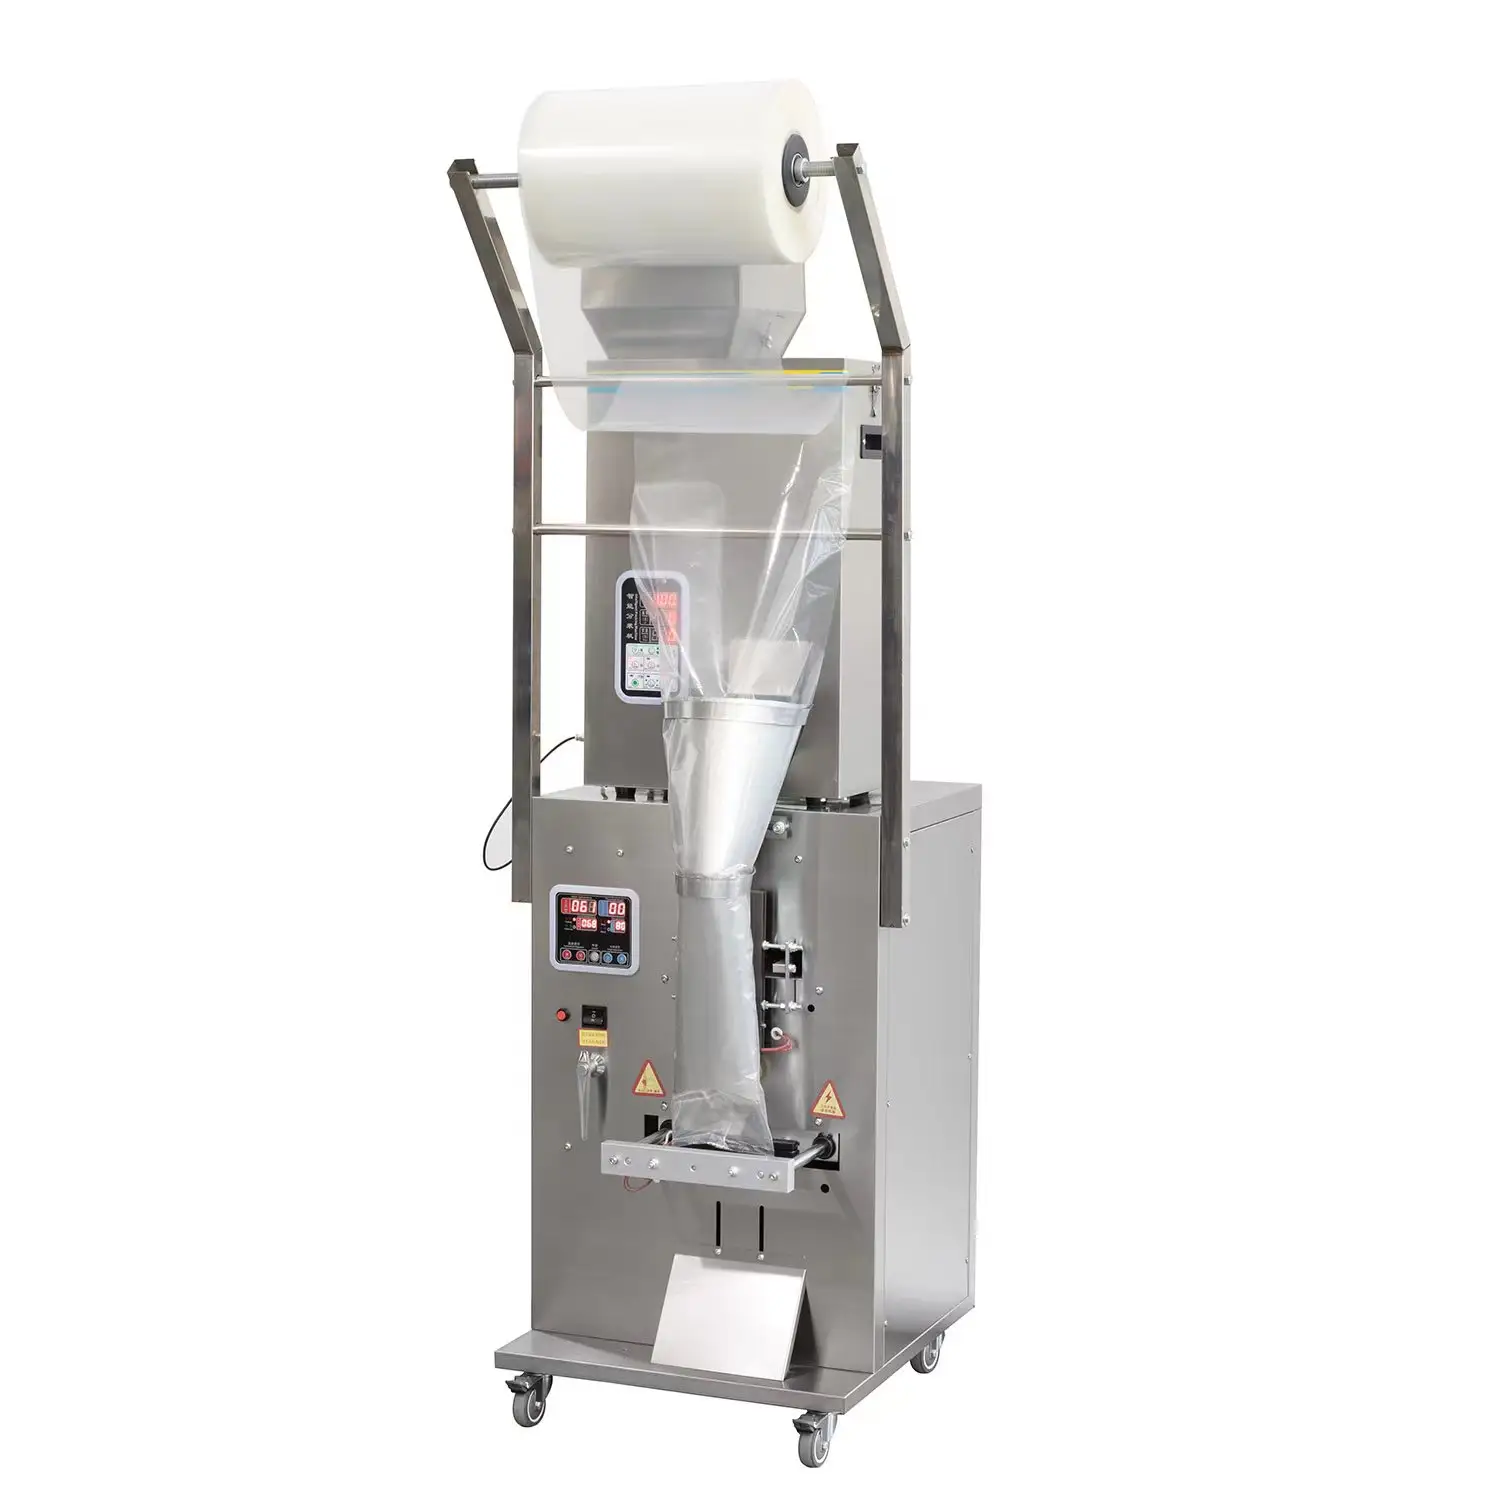 FZ-100 Wanhe multi-function packaging machines plastic bag sealing granule packing machine